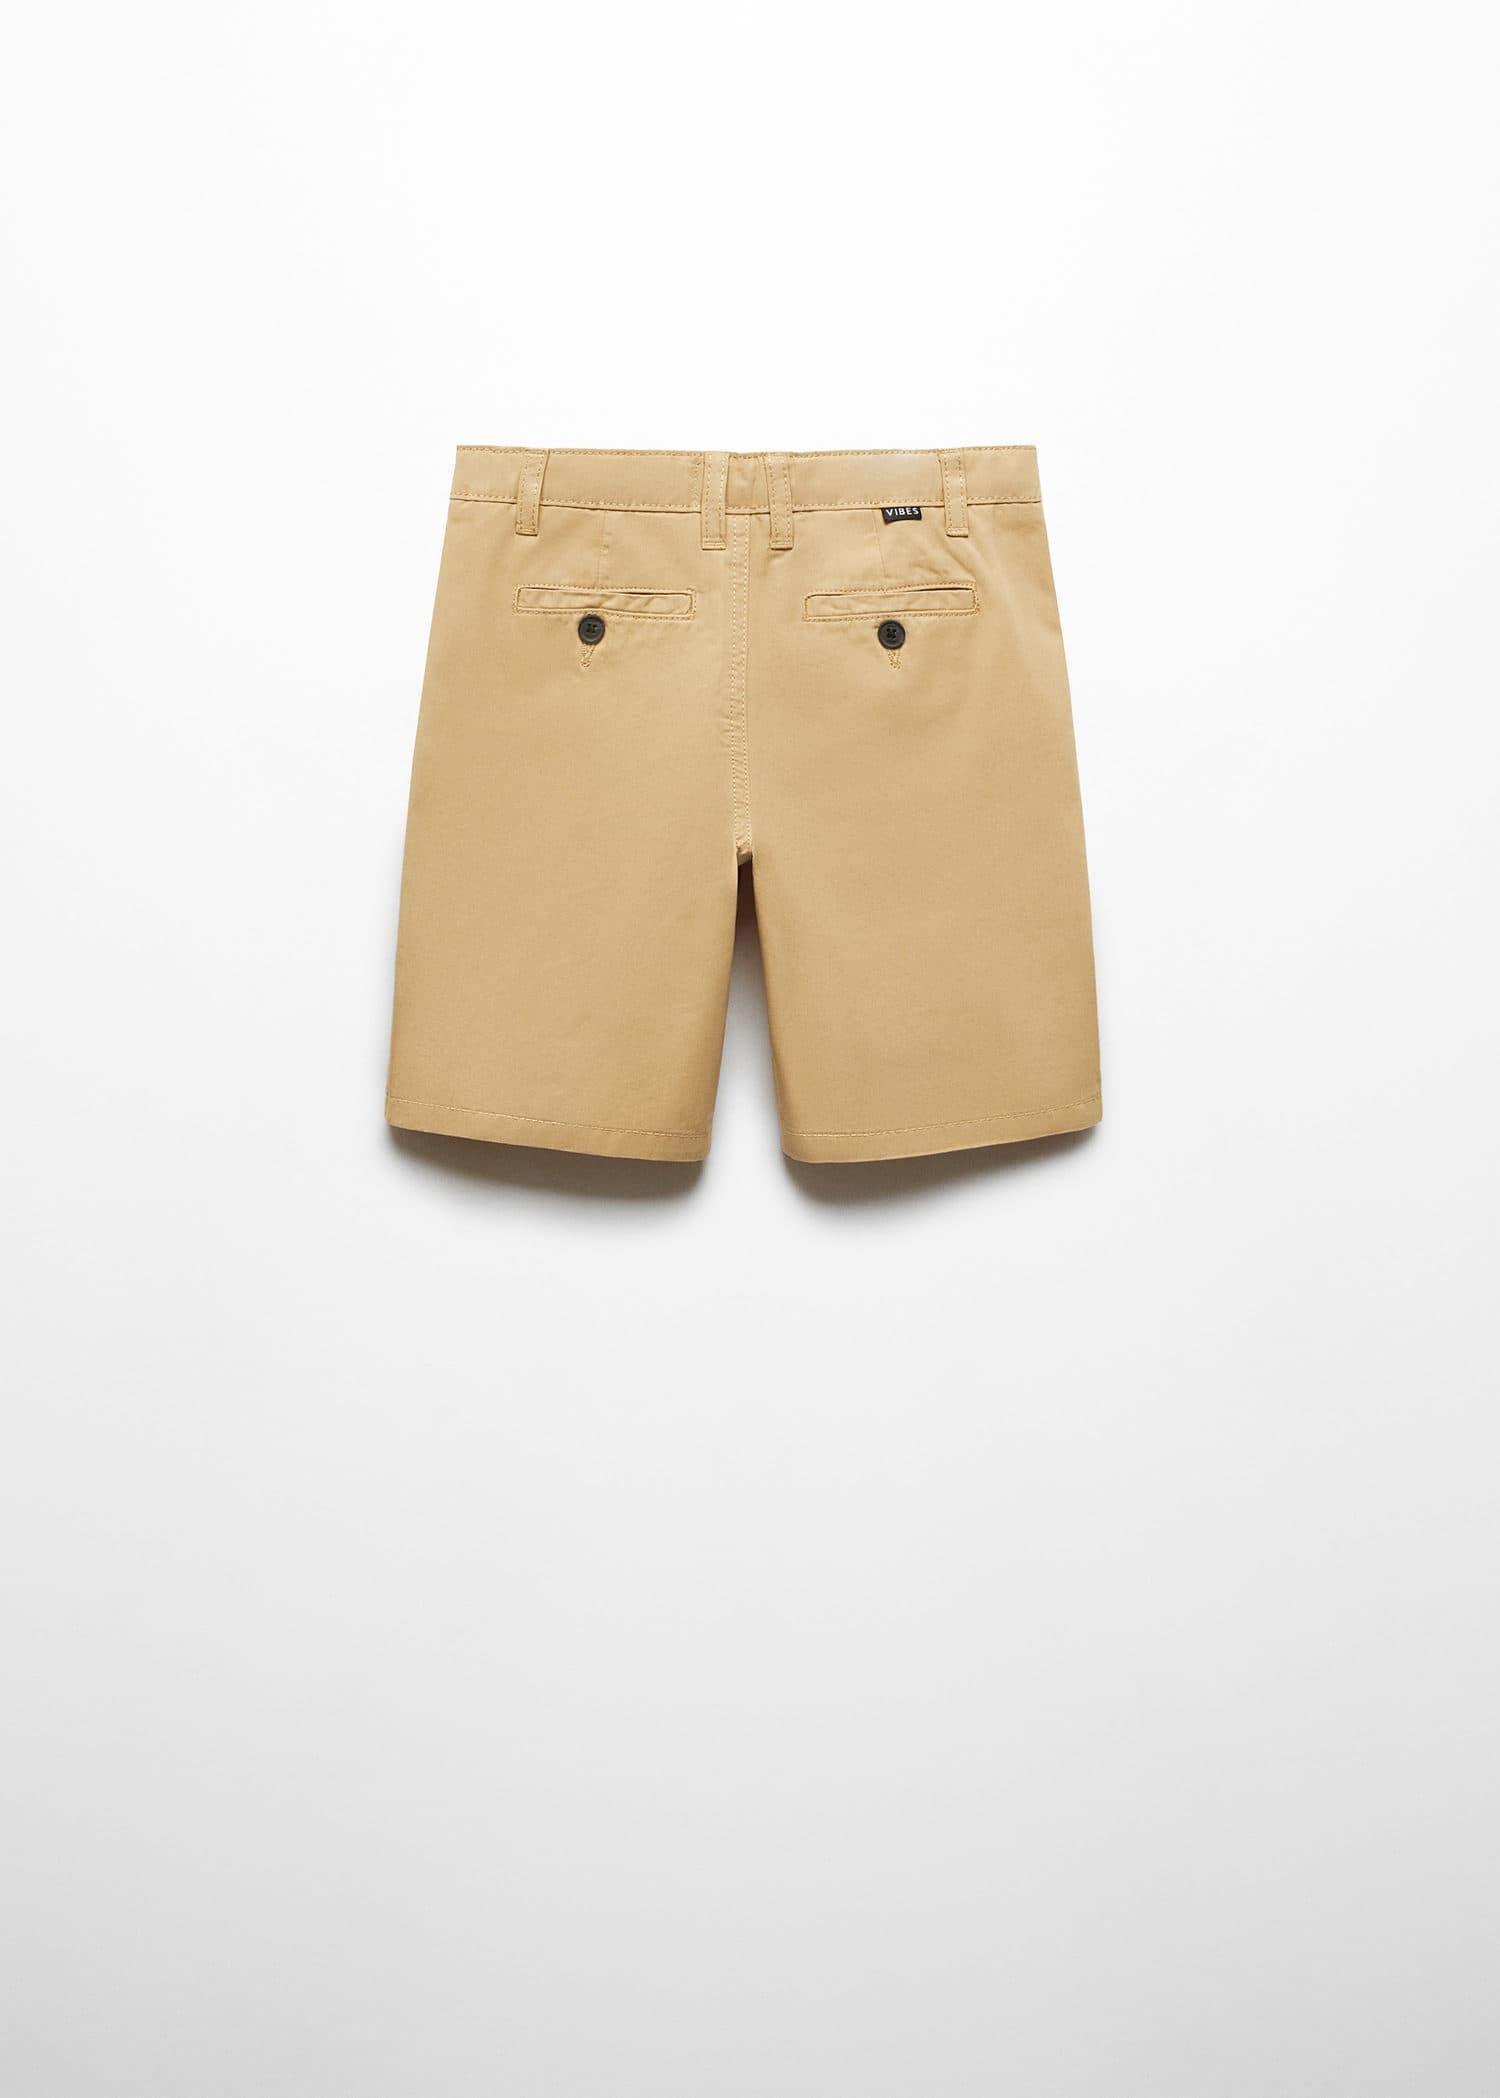 Mango - Yellow Cotton Bermuda Shorts, Kids Boys